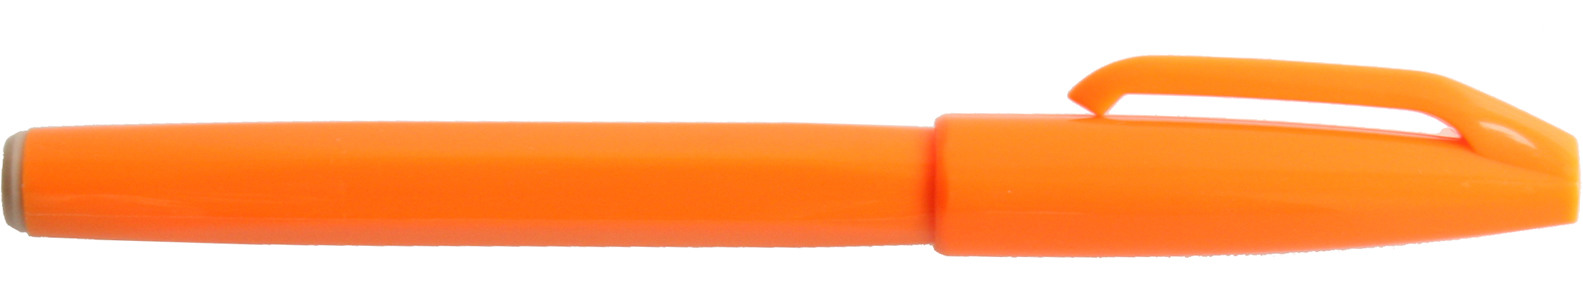 PENTEL Stylos fibre Sign Pen 2.0mm S520-F orange